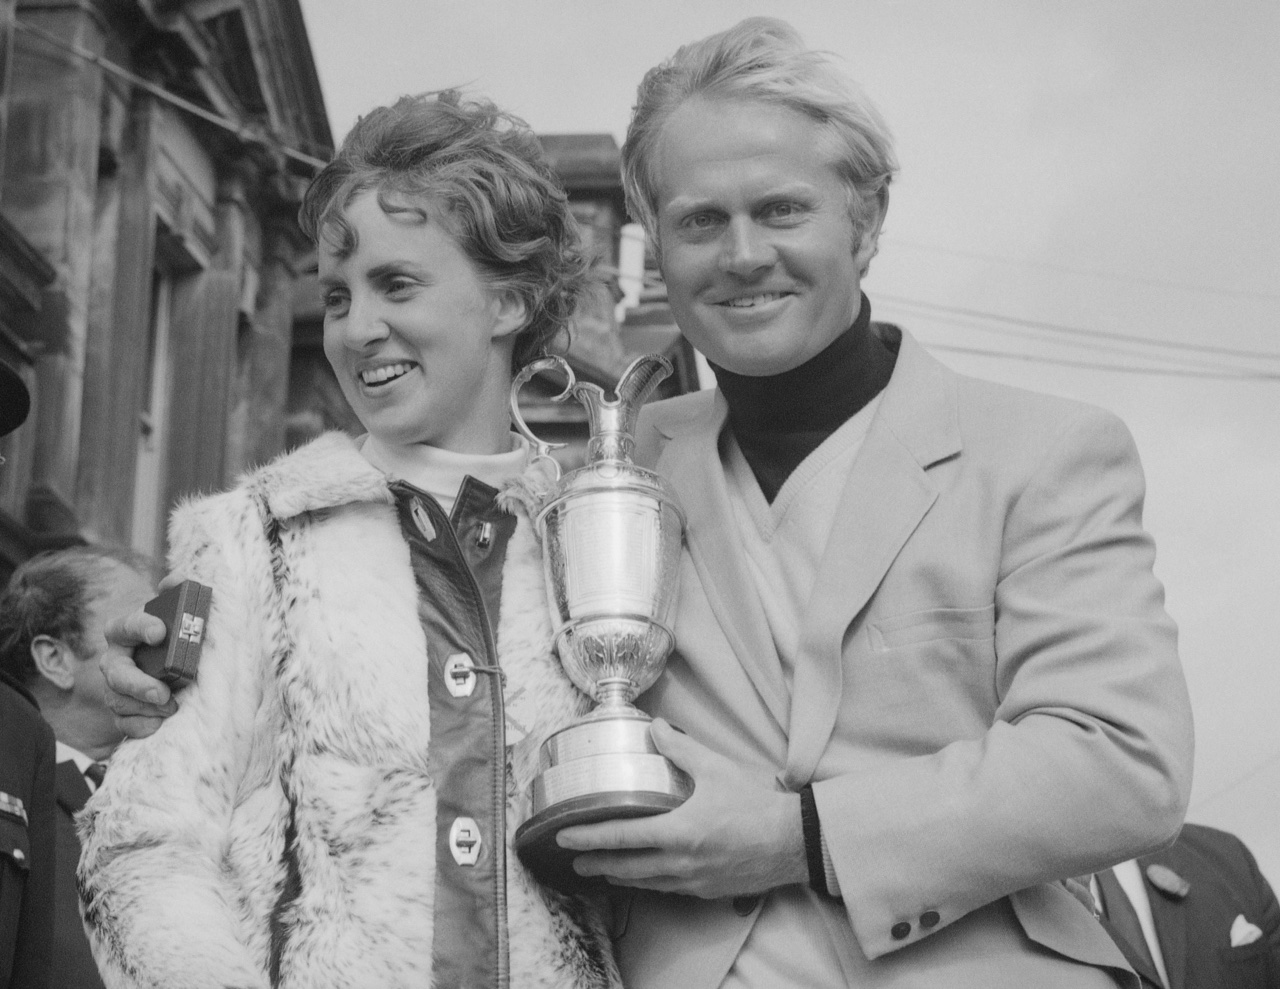 Jack Nicklaus won the 1970 Open Championship